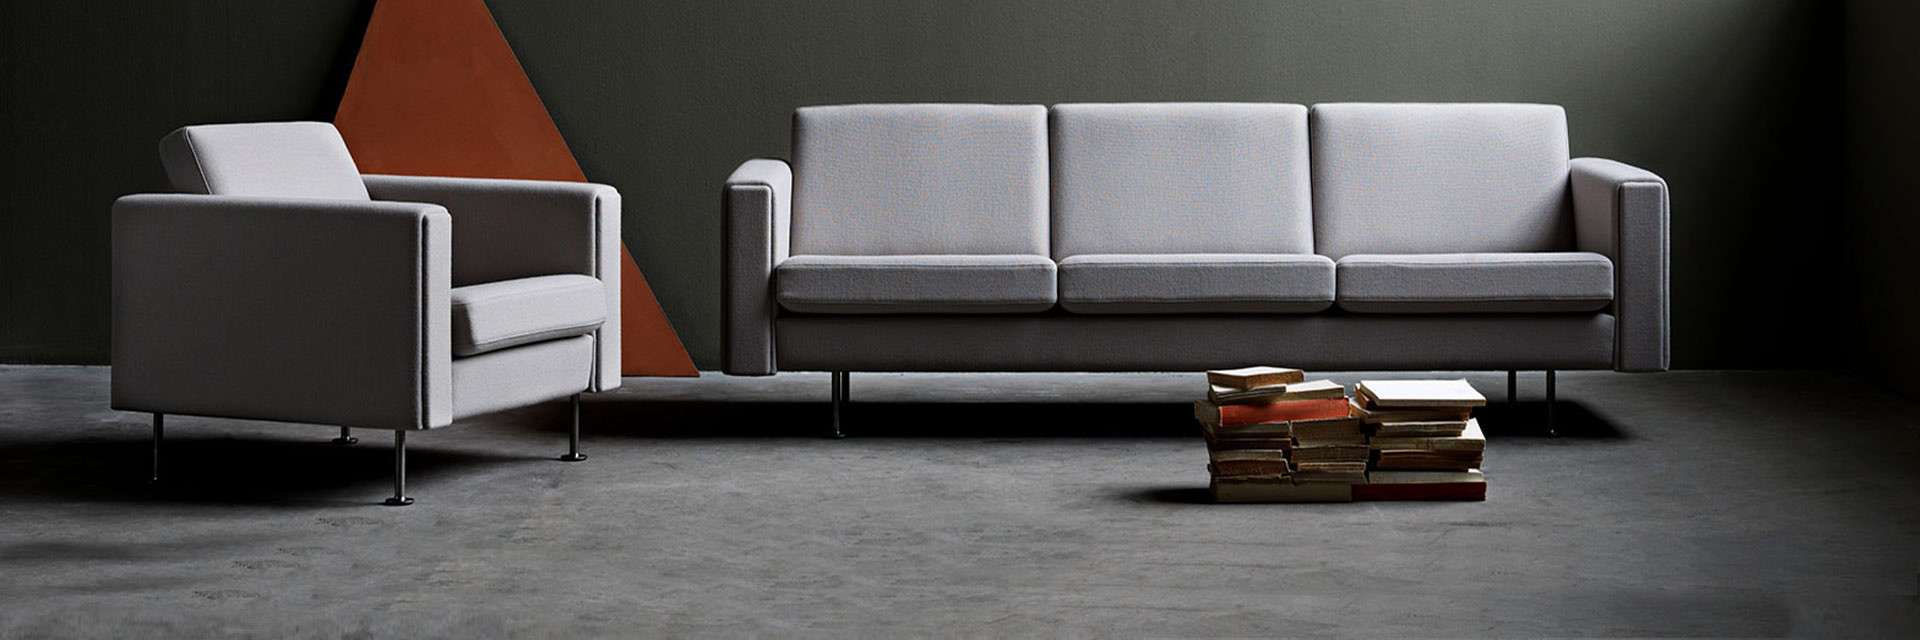 Scandinavian design furniture, lighting and decorative items for living rooms - La boutique danoise